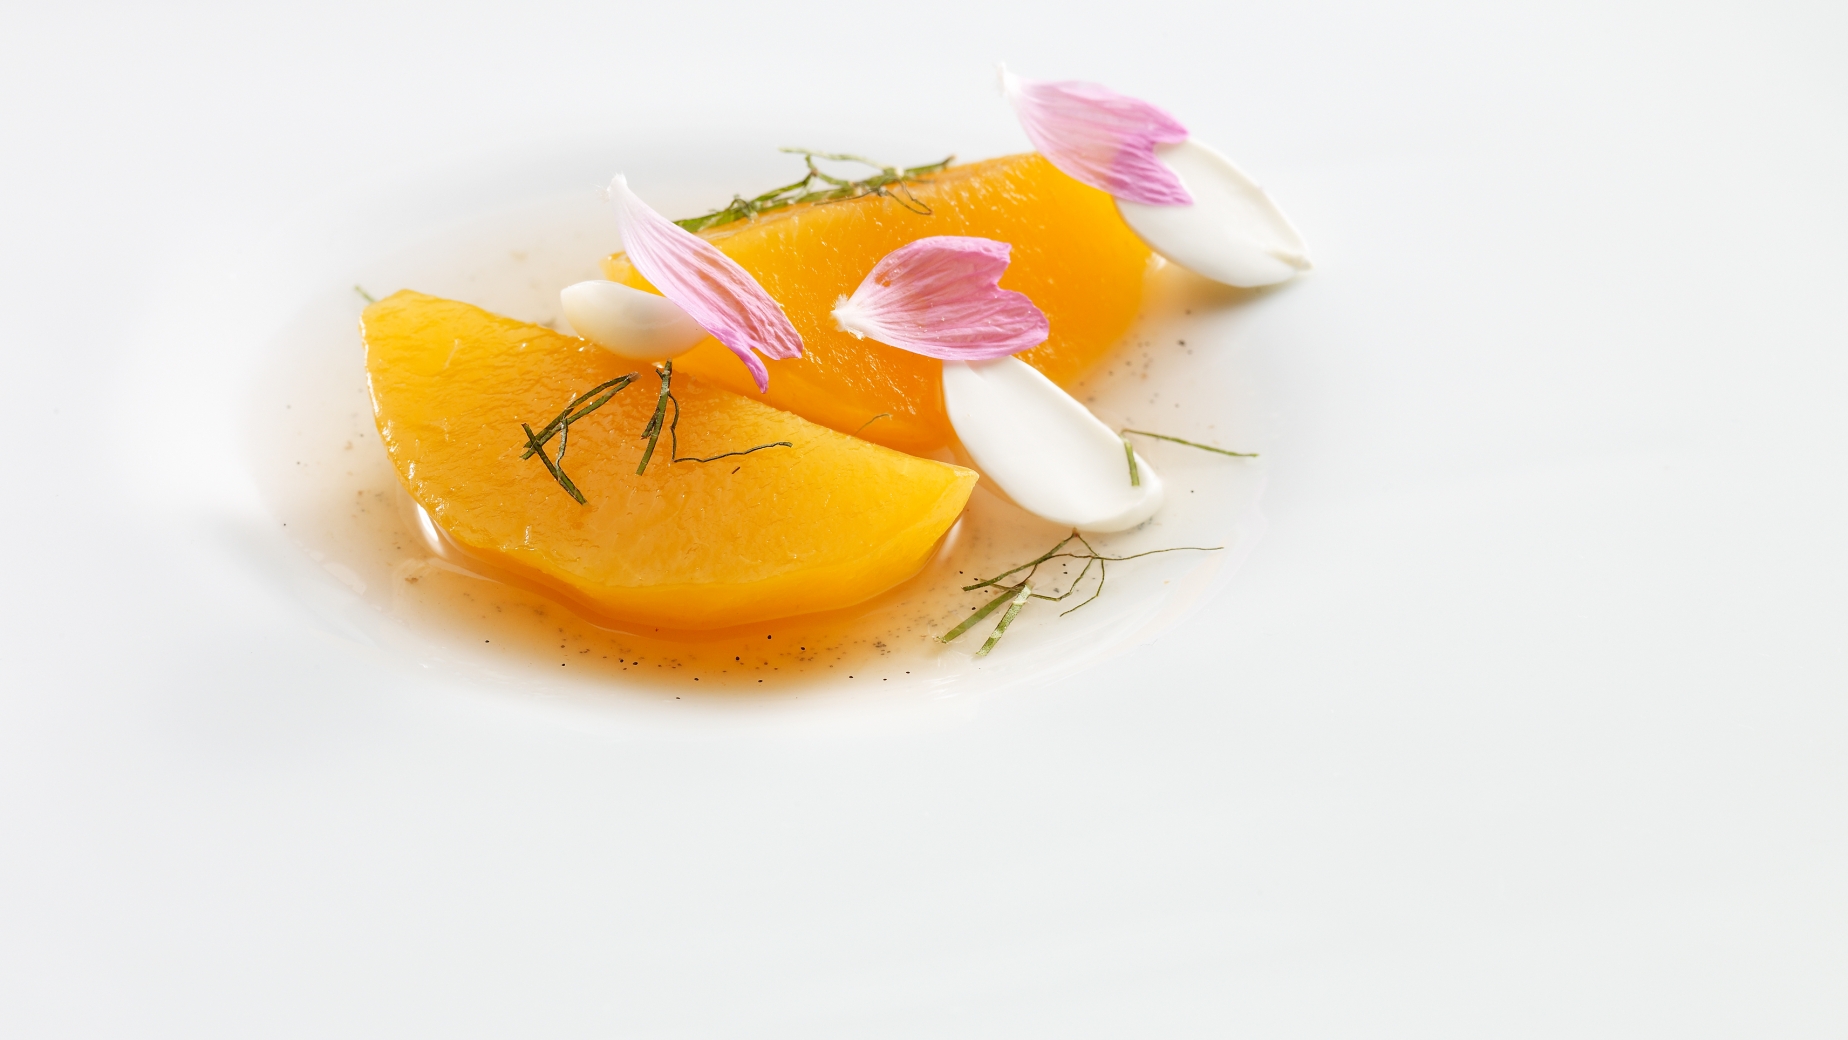 Segments of red peach,  almond essence and soup of white flowers.
PHOTO: José Luis López de Zubiría / Mugaritz